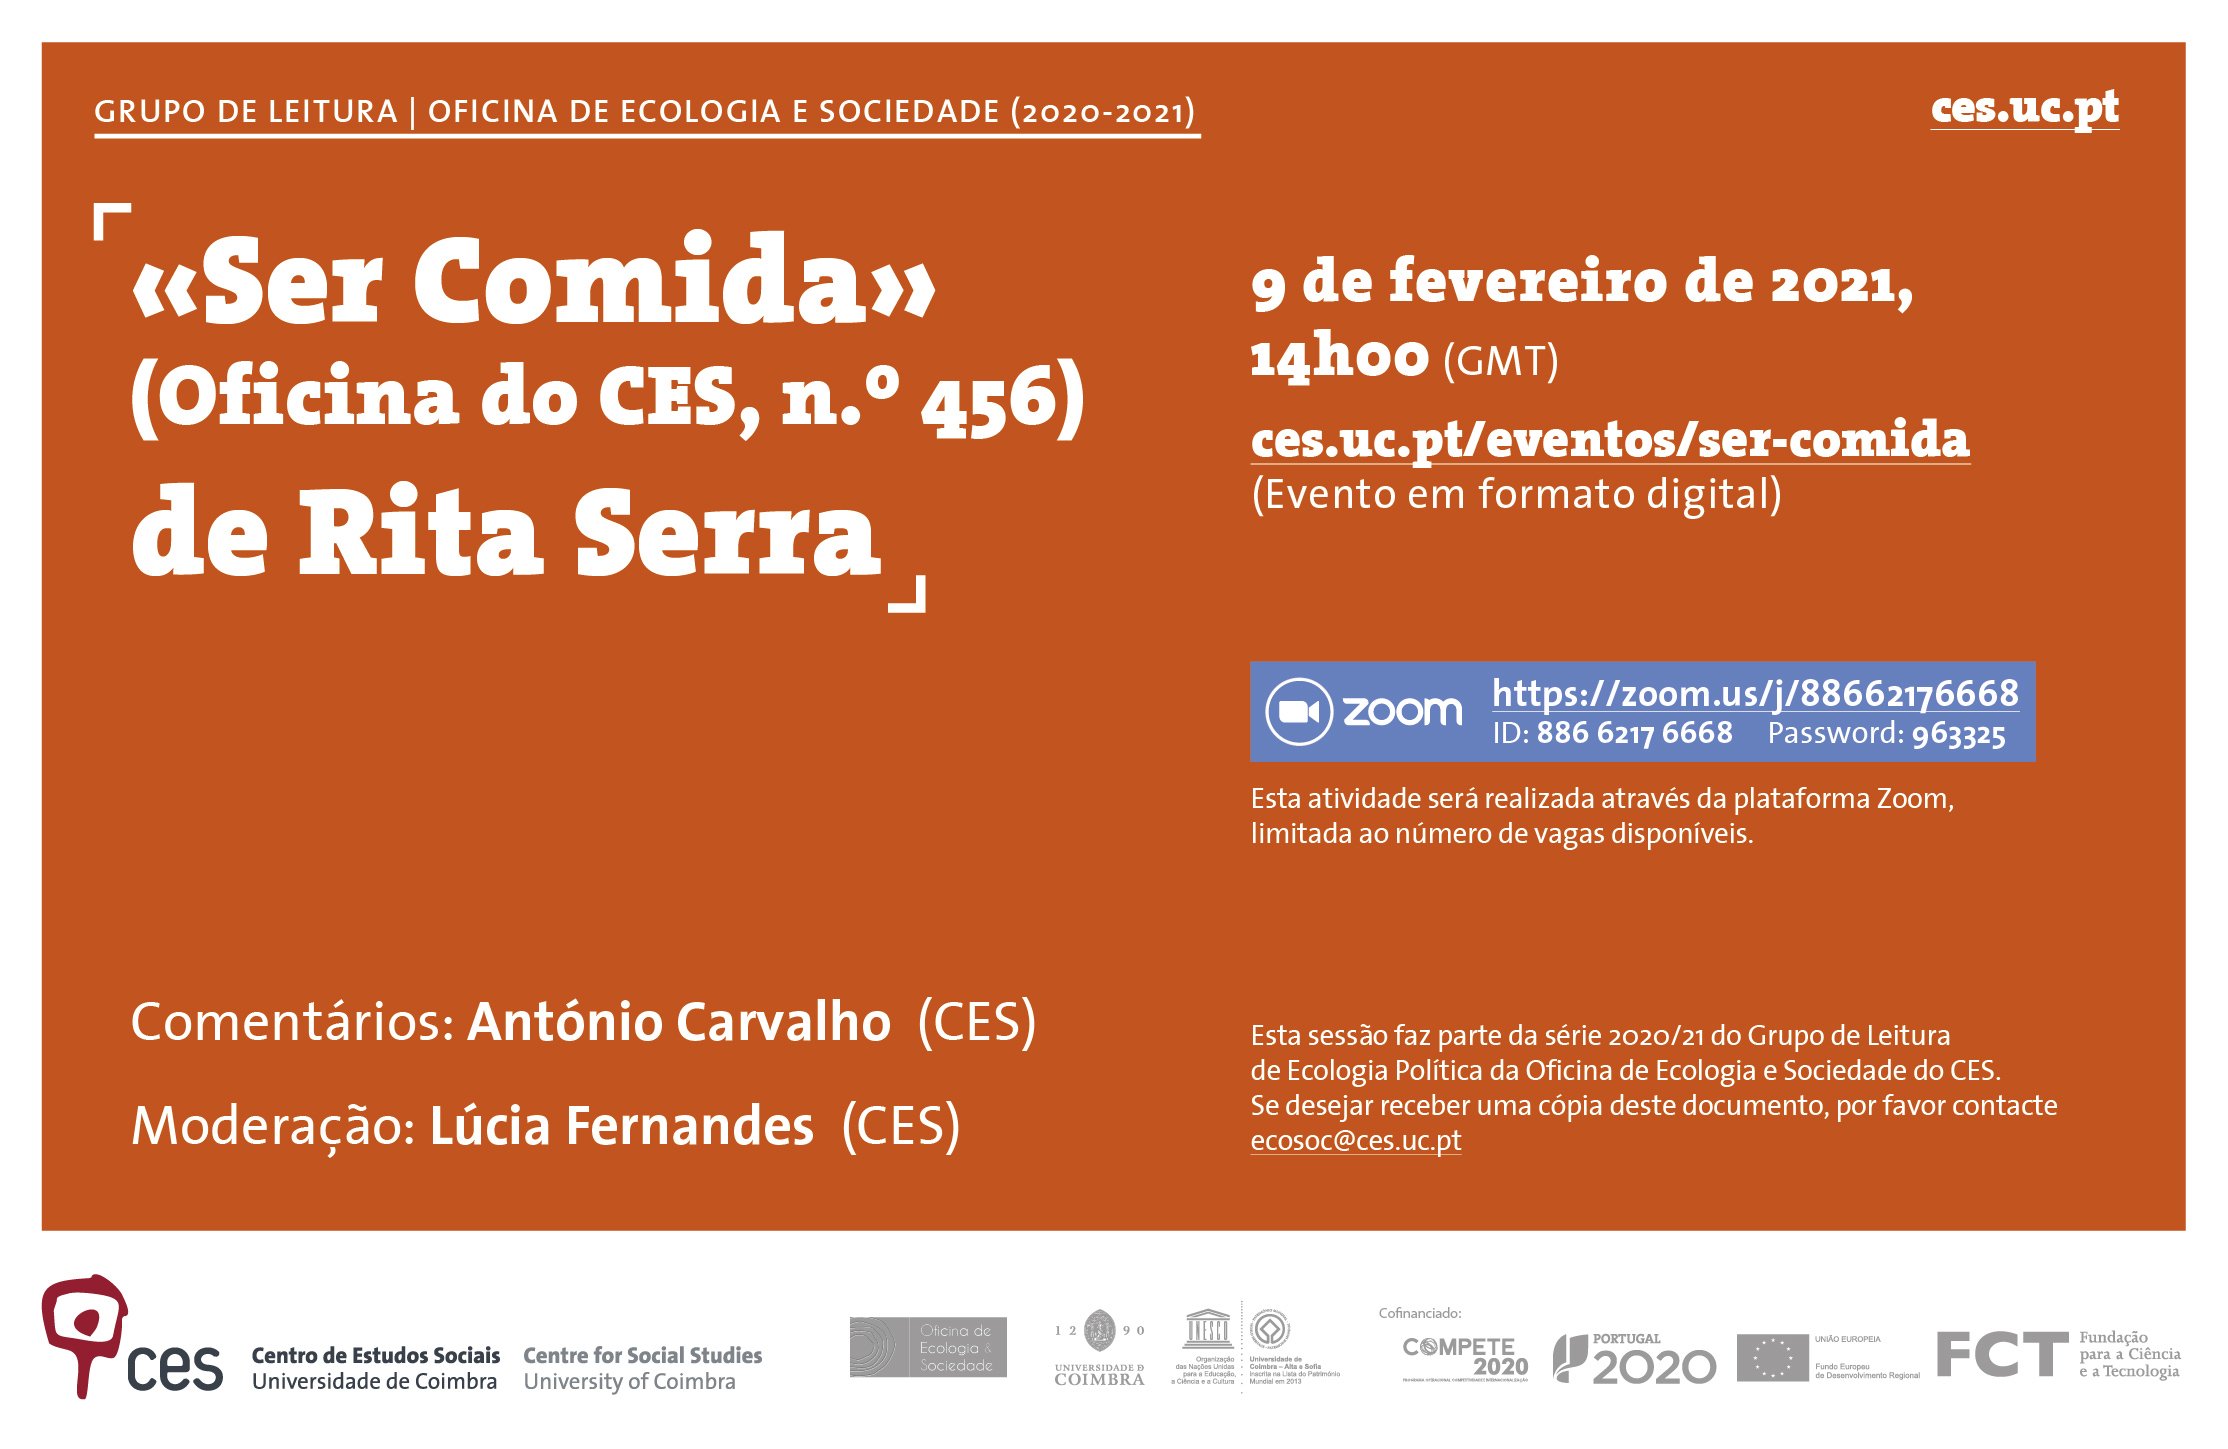 «Ser Comida» (Oficina do CES, Issue 456) by Rita Serra<span id="edit_31773"><script>$(function() { $('#edit_31773').load( "/myces/user/editobj.php?tipo=evento&id=31773" ); });</script></span>